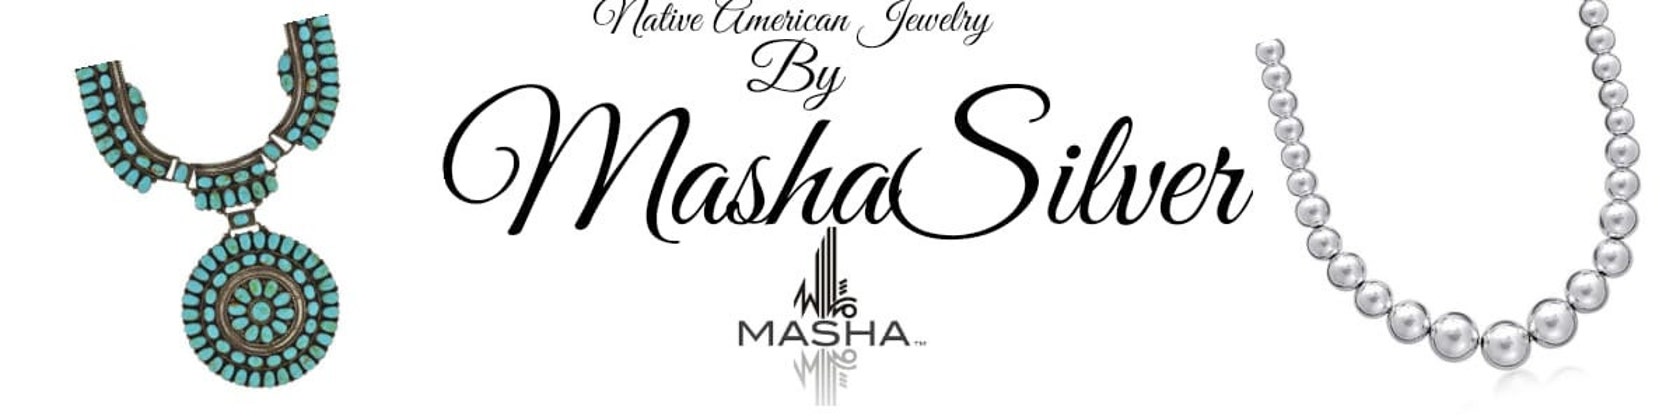 shop - Masha